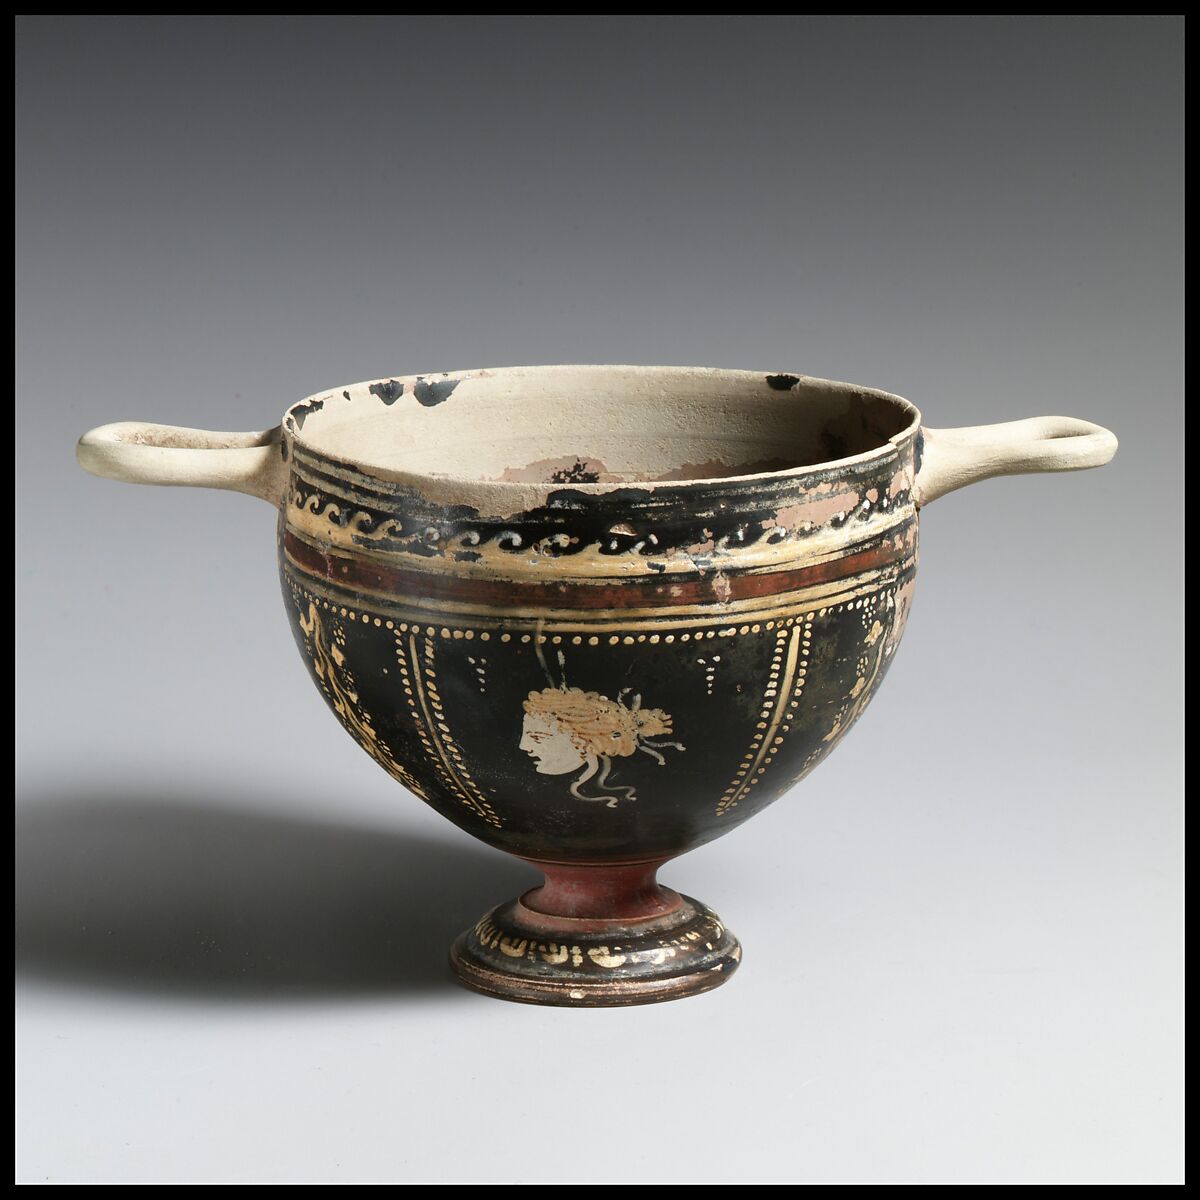 Terracotta skyphos (deep drinking cup), Attributed to the Ambrosiana Painter, Terracotta, Greek, South Italian, Apulian, Gnathian 